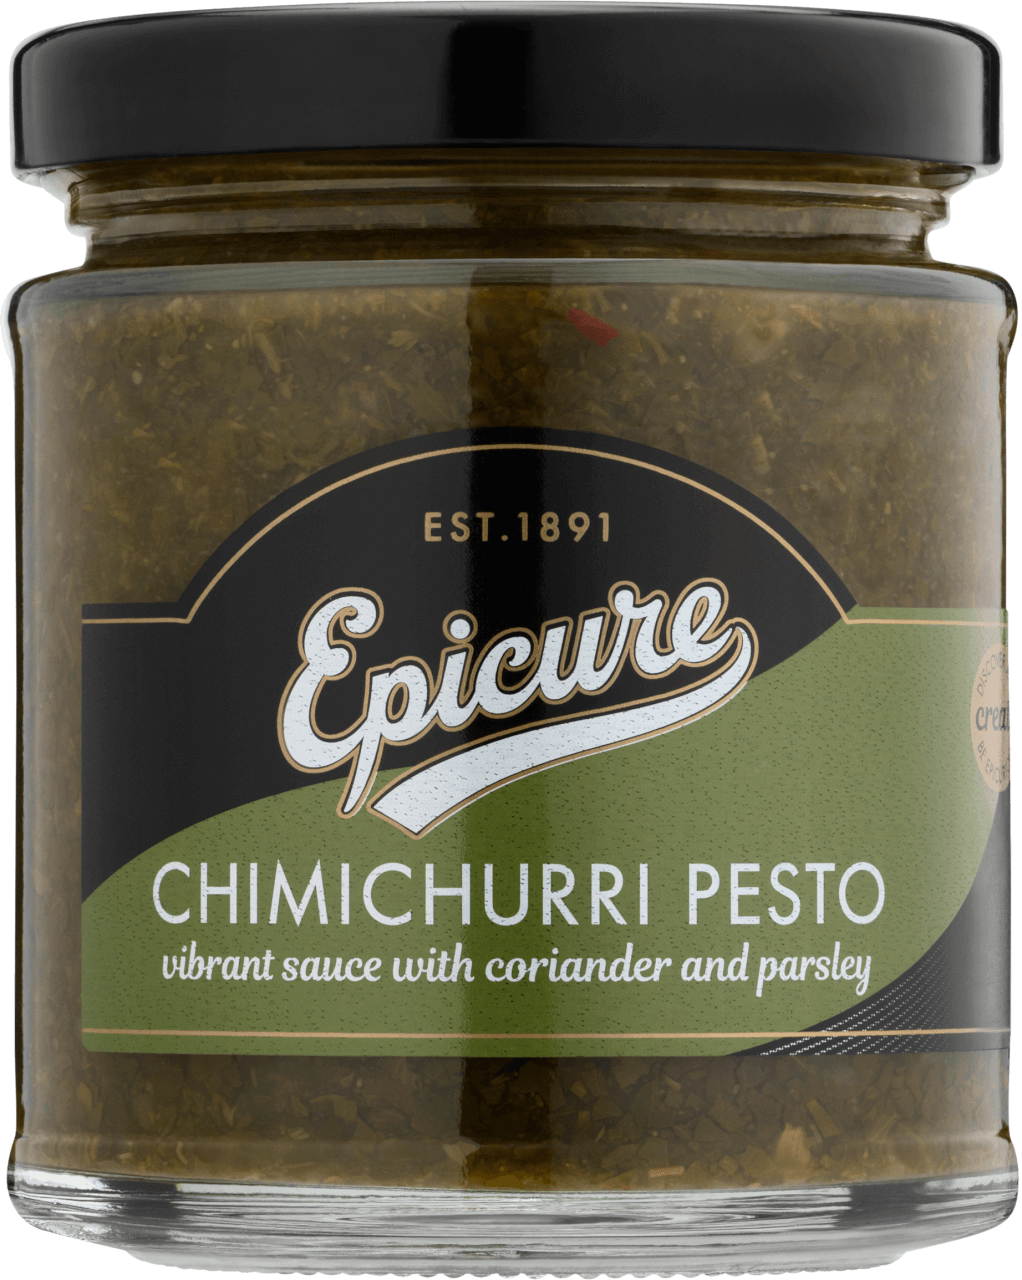 Chimichurri Pesto vibrant sauce with coriander and parsley - Item at ...